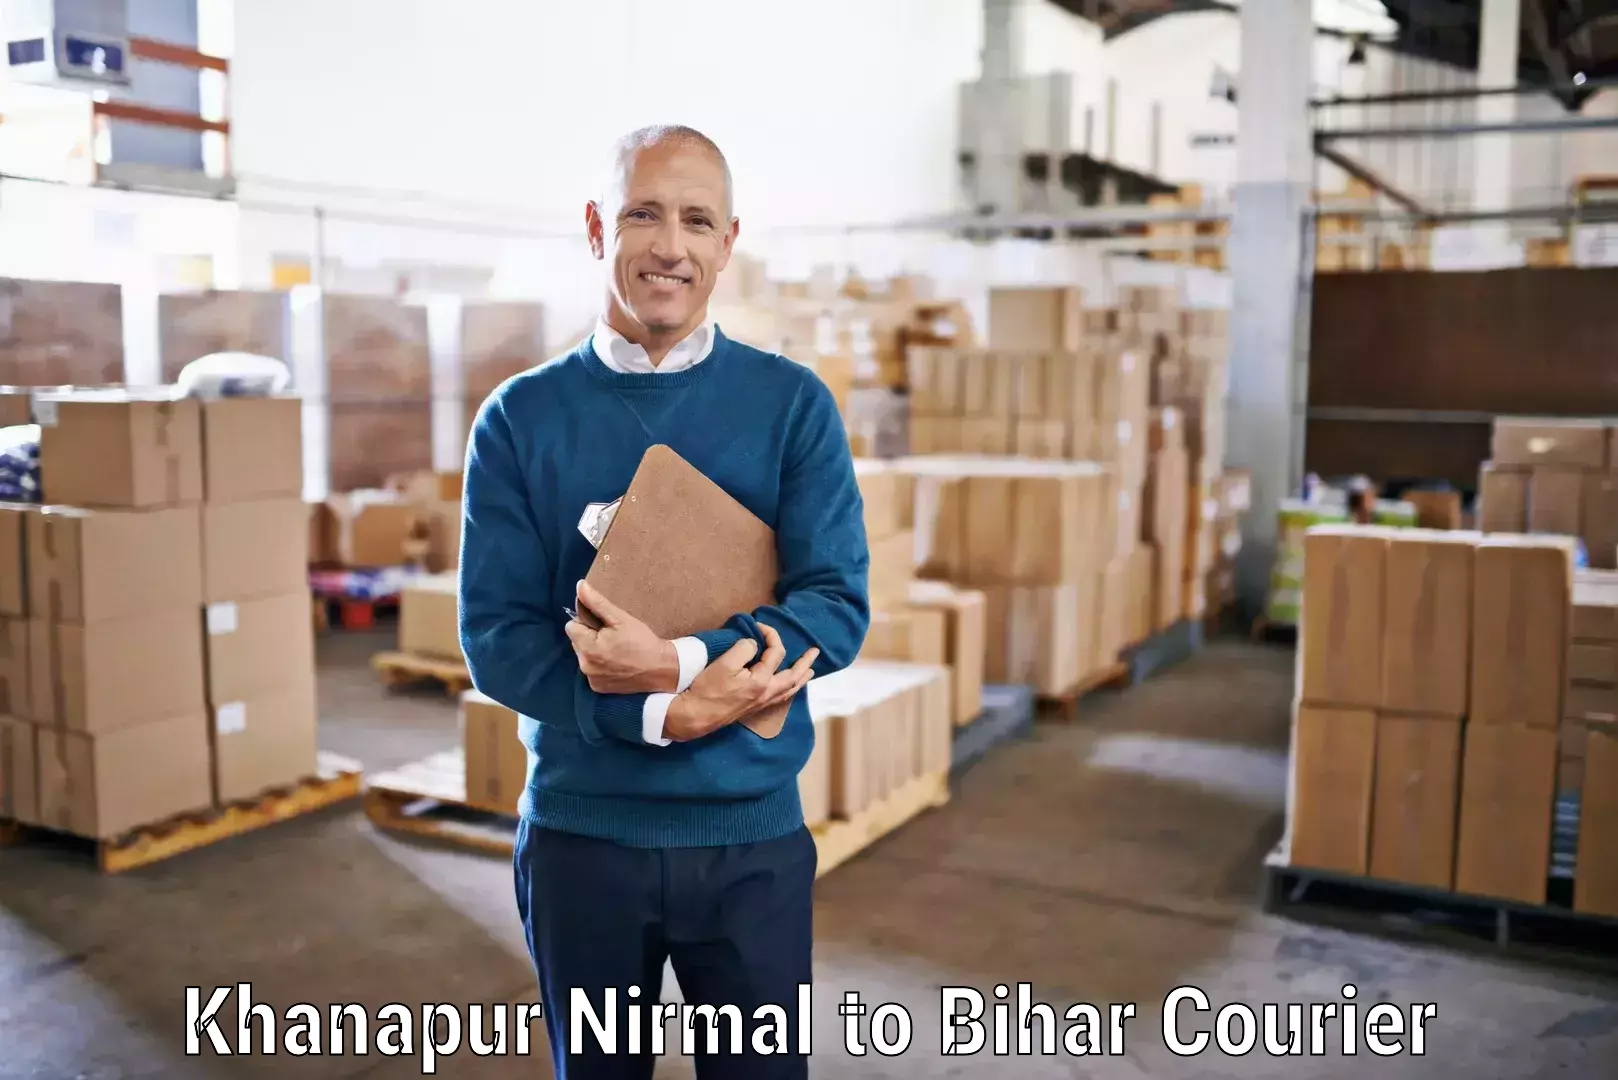 Affordable parcel service Khanapur Nirmal to Chakai